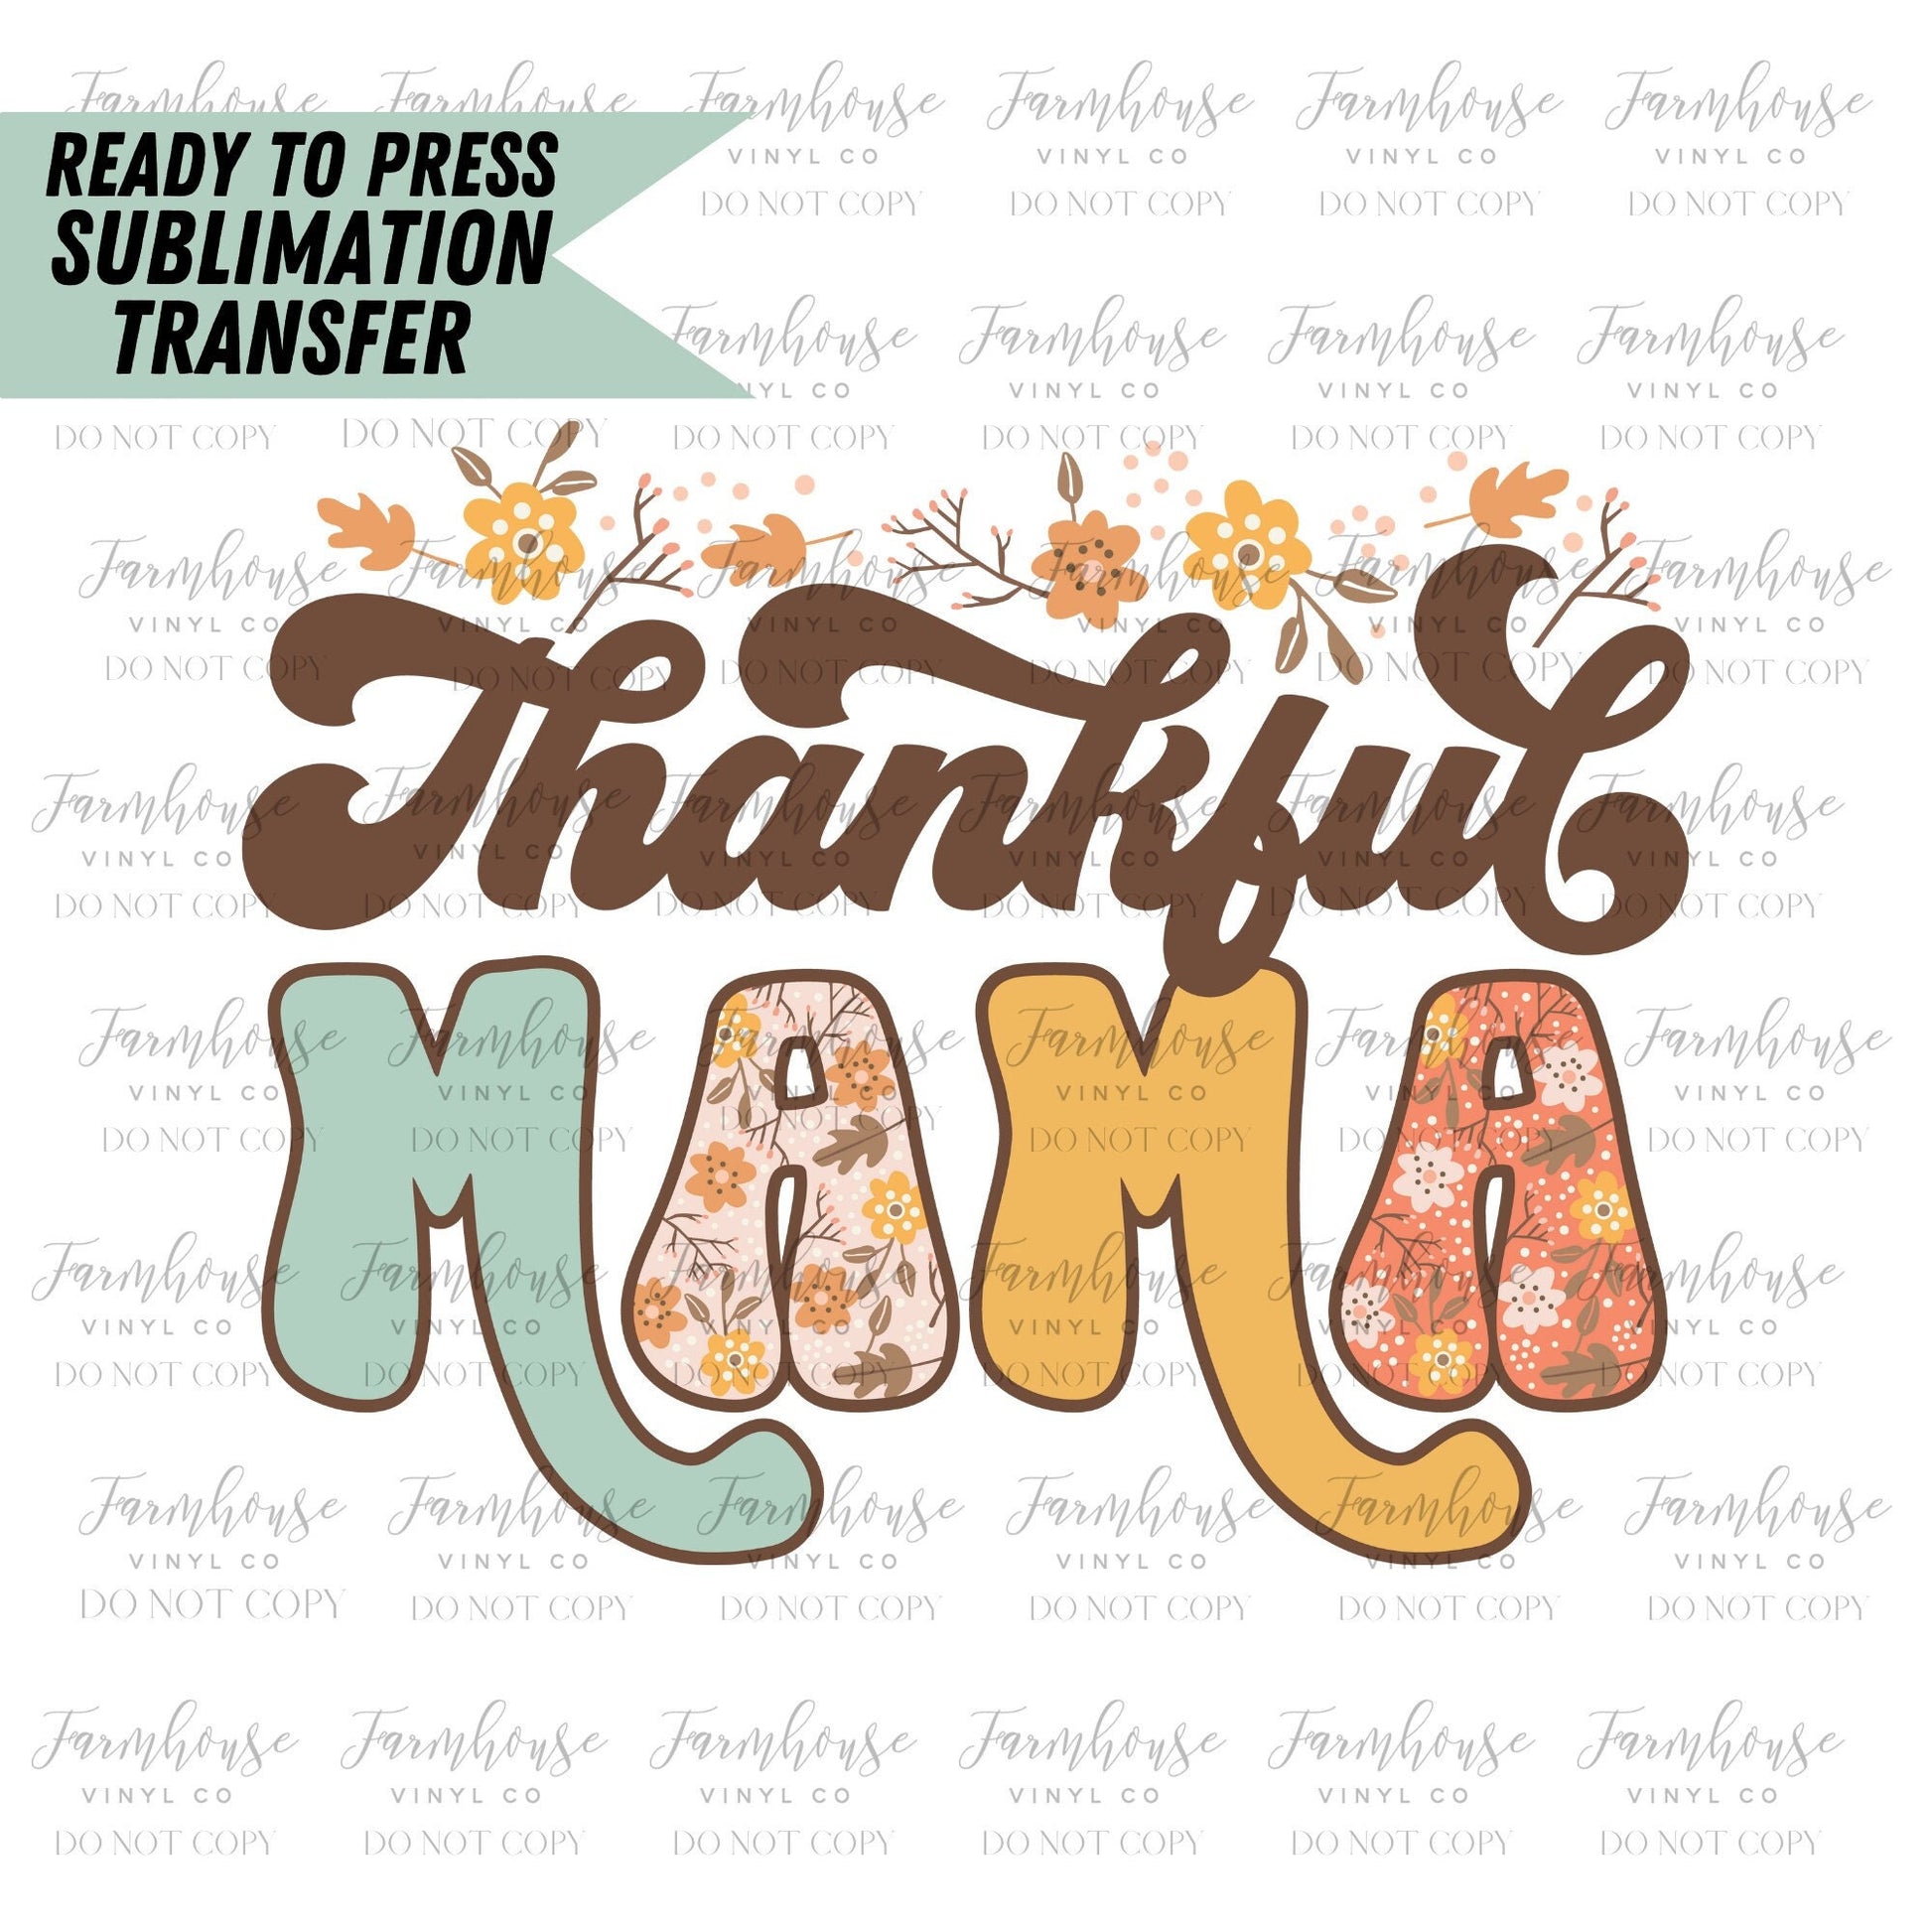 Thankful Mama Retro Design, Retro Thanksgiving Designs, Ready To Press, Sublimation, Transfer Ready Press, Teal Pumpkin, Fall Floral Design - Farmhouse Vinyl Co